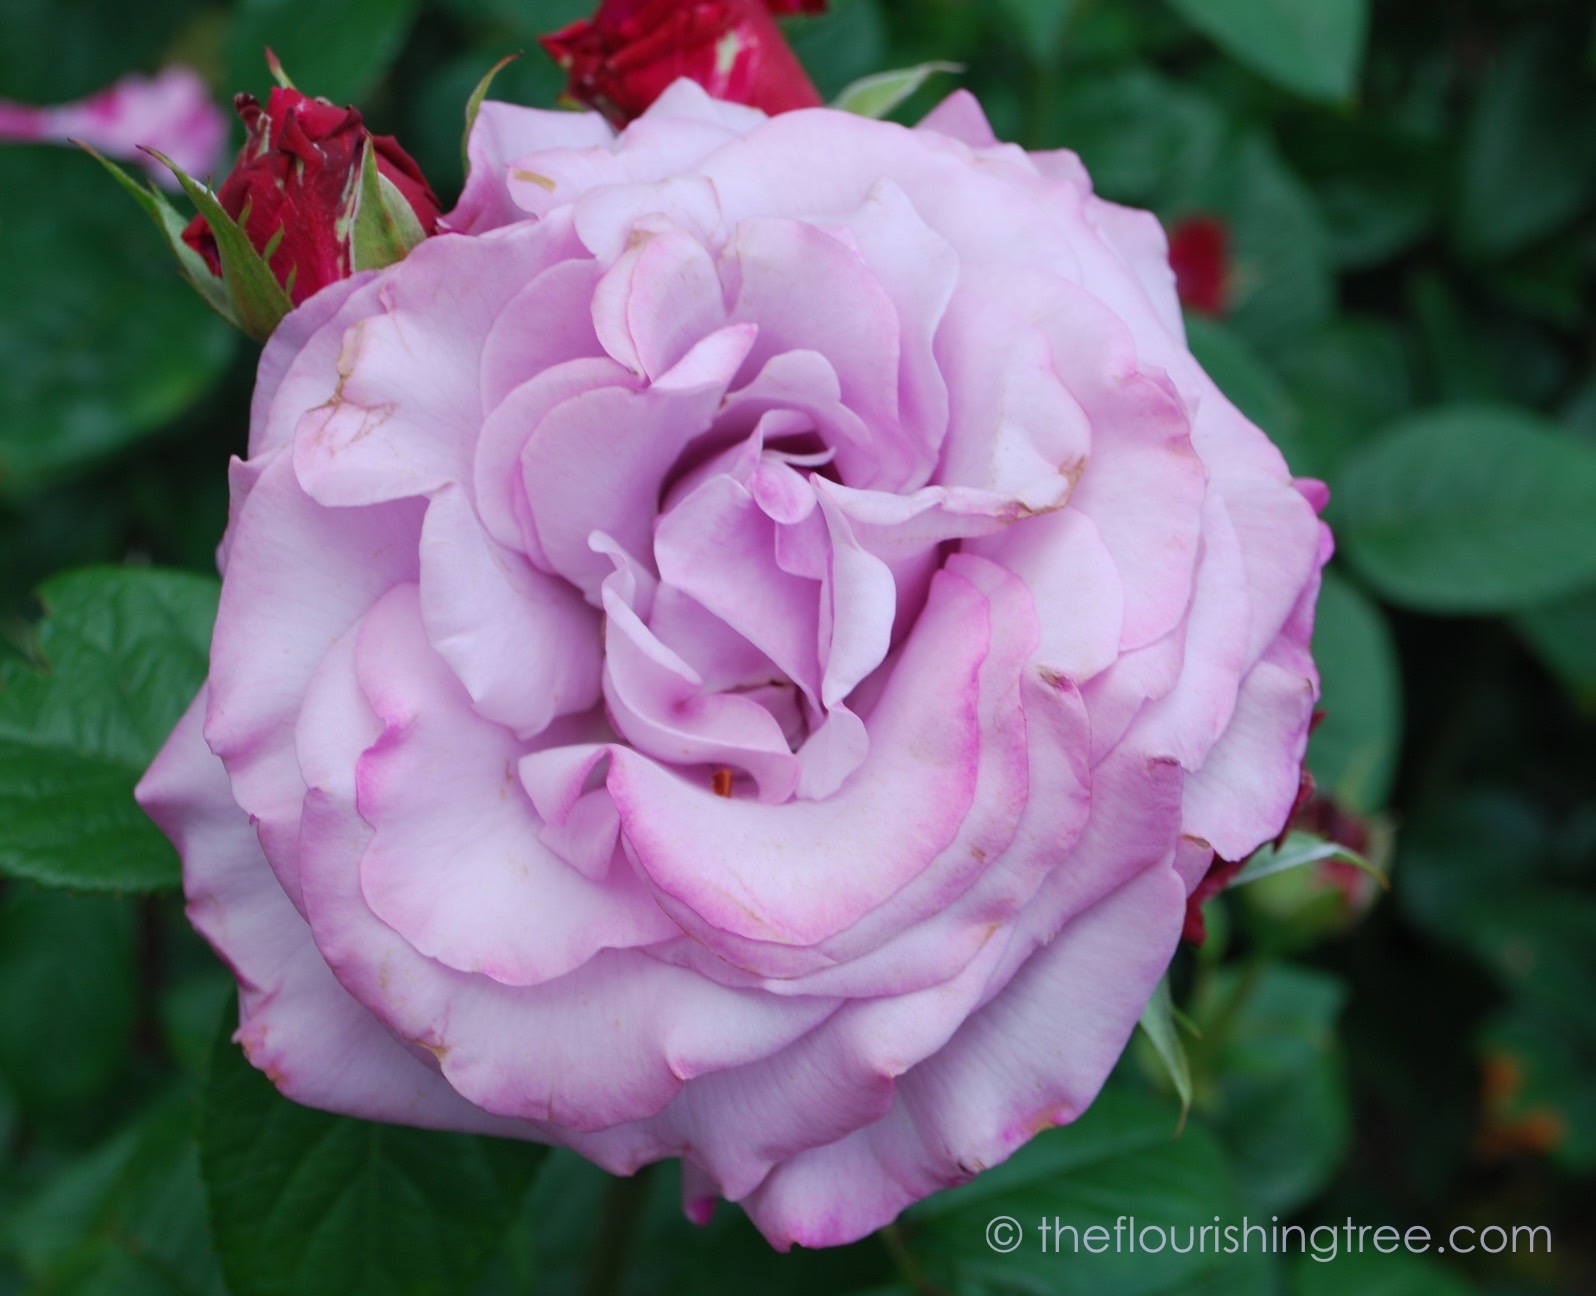 The rose garden | The Flourishing Tree